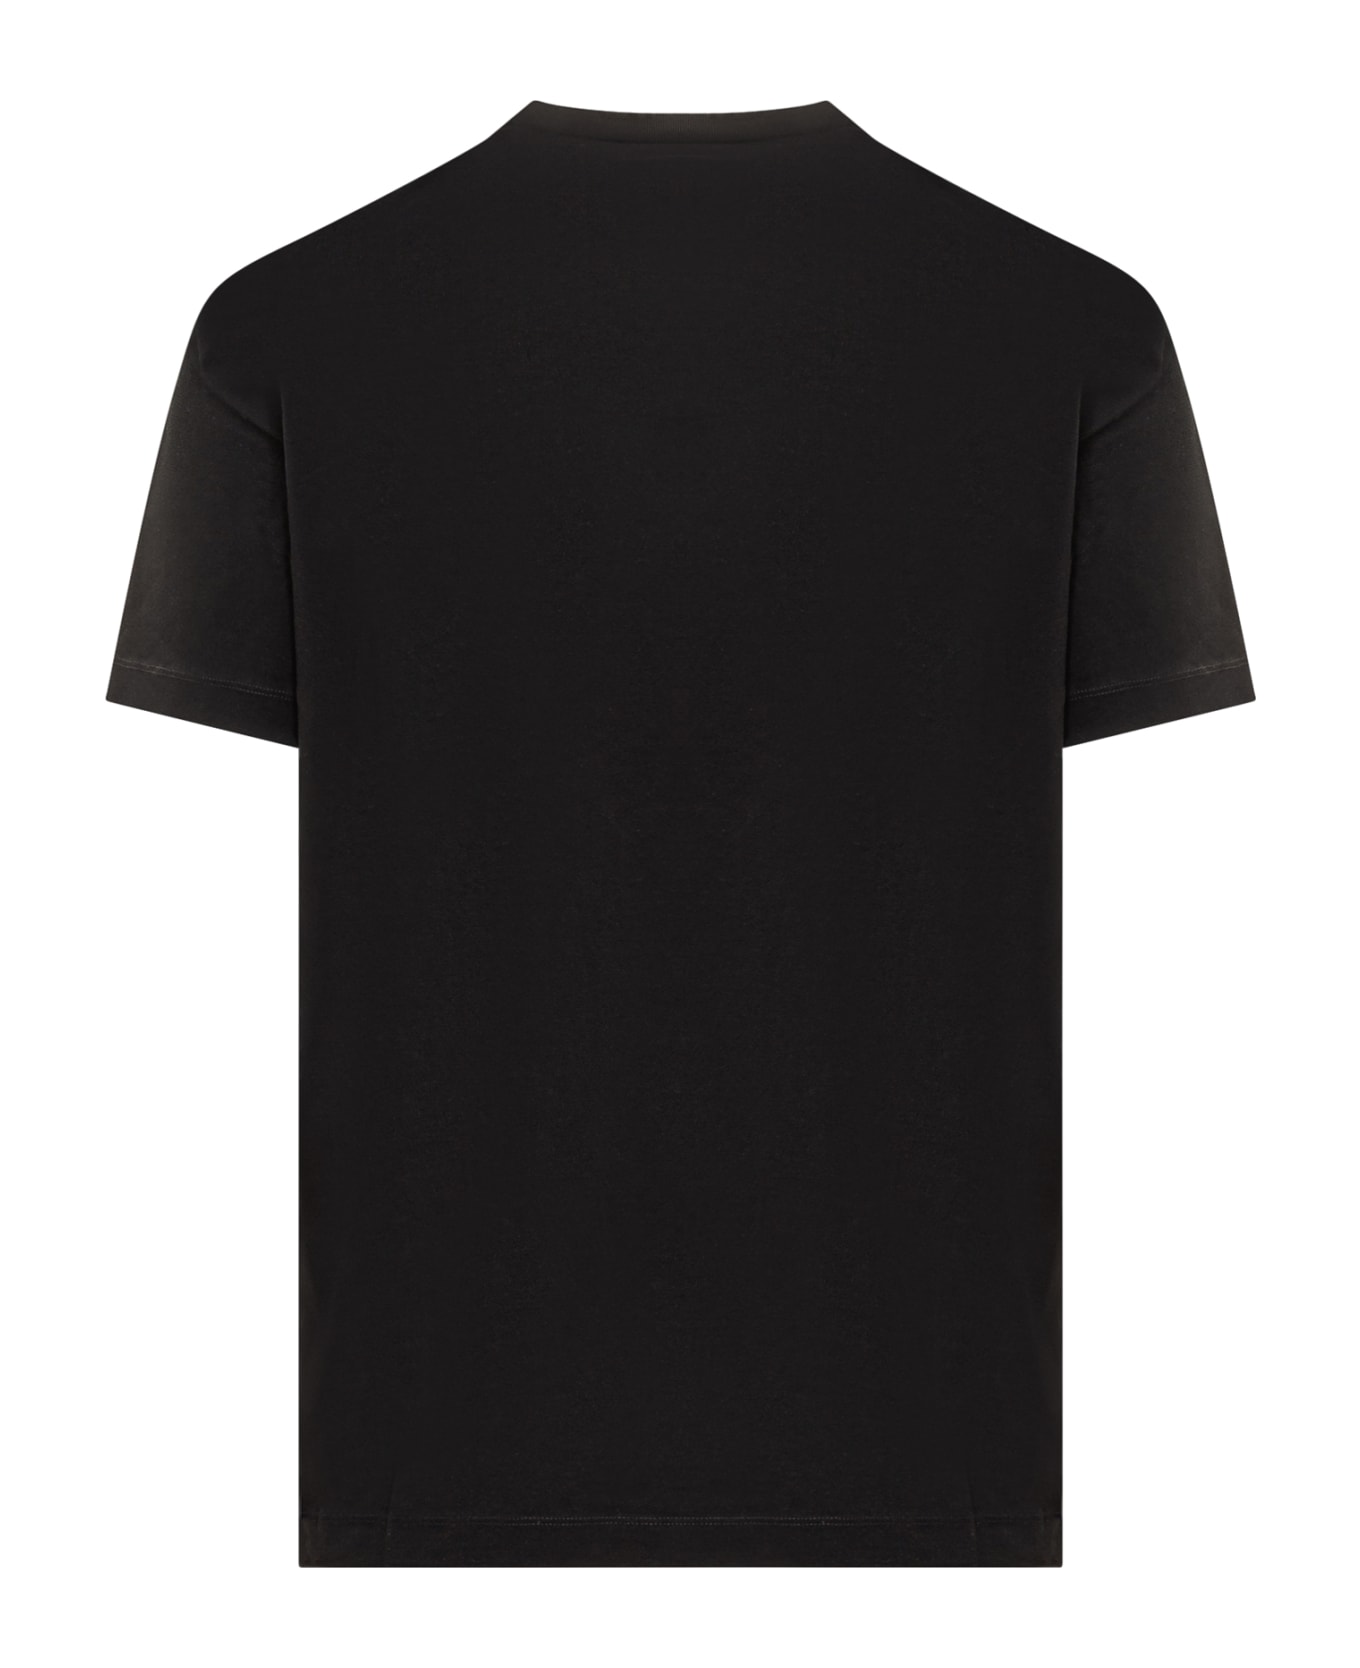 Dsquared2 Ceresio 9 T-shirt - BLACK